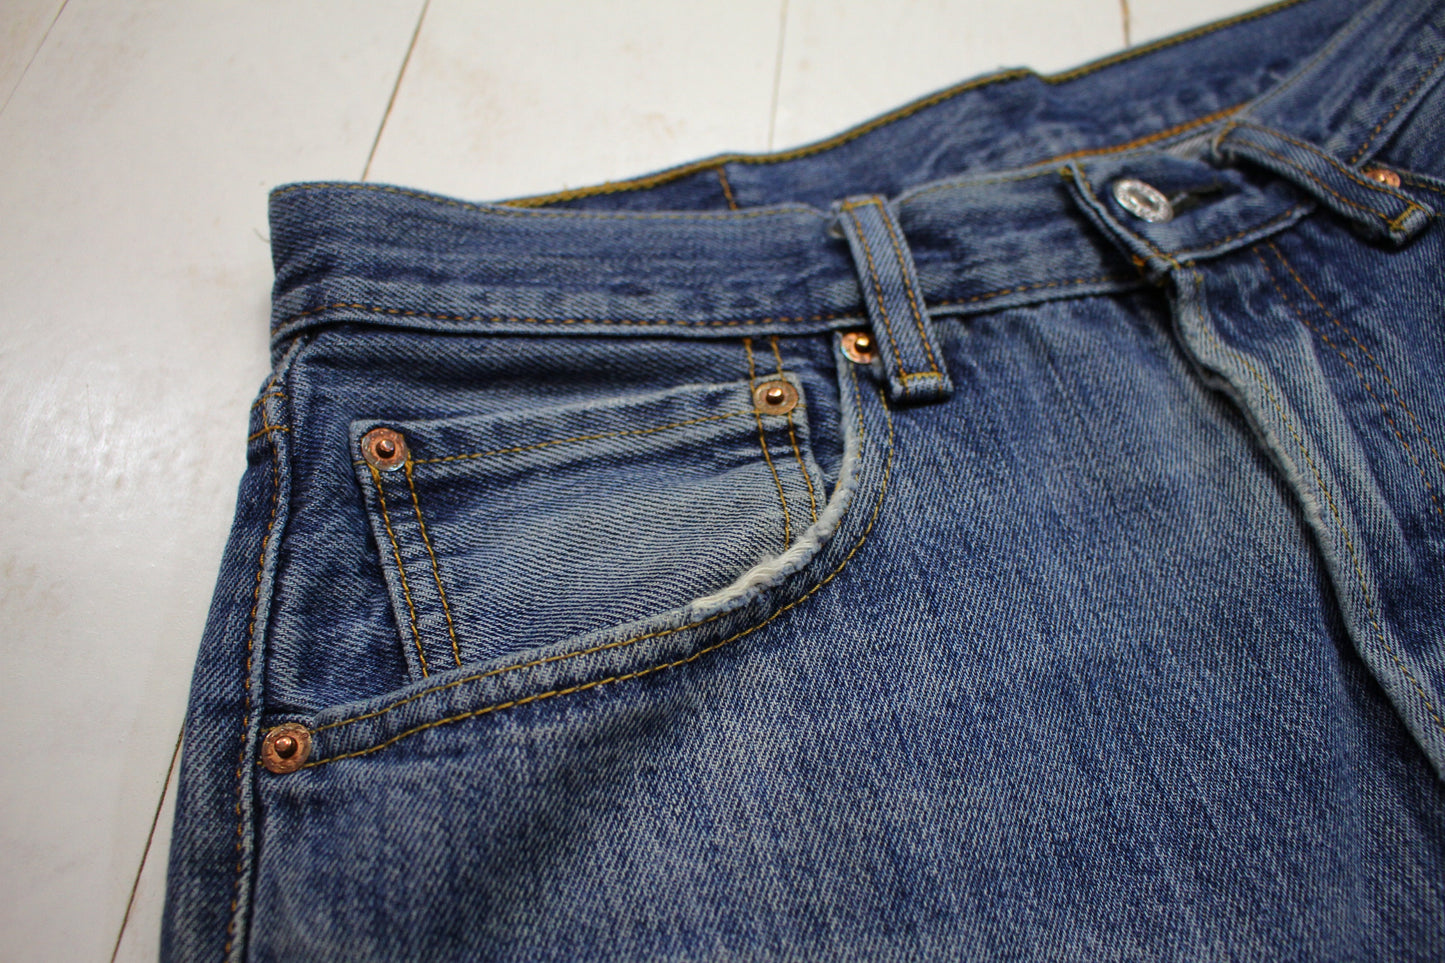 2010s Levi's 501 Faded Blue Denim Jeans Size 30x28